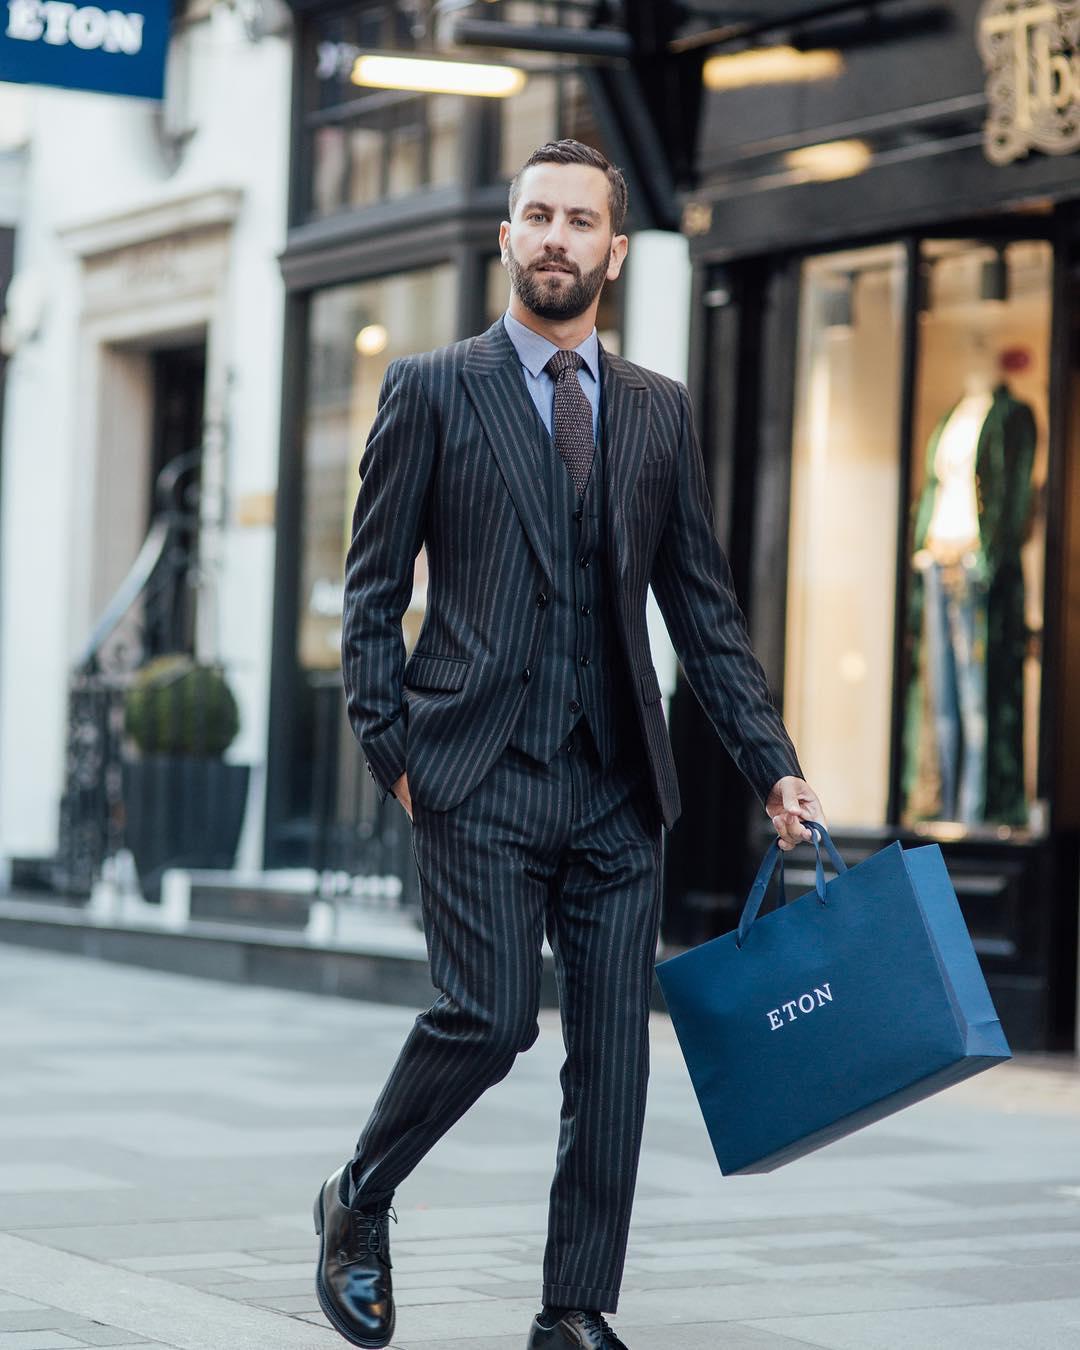 How do you imagine an ideal business attire?